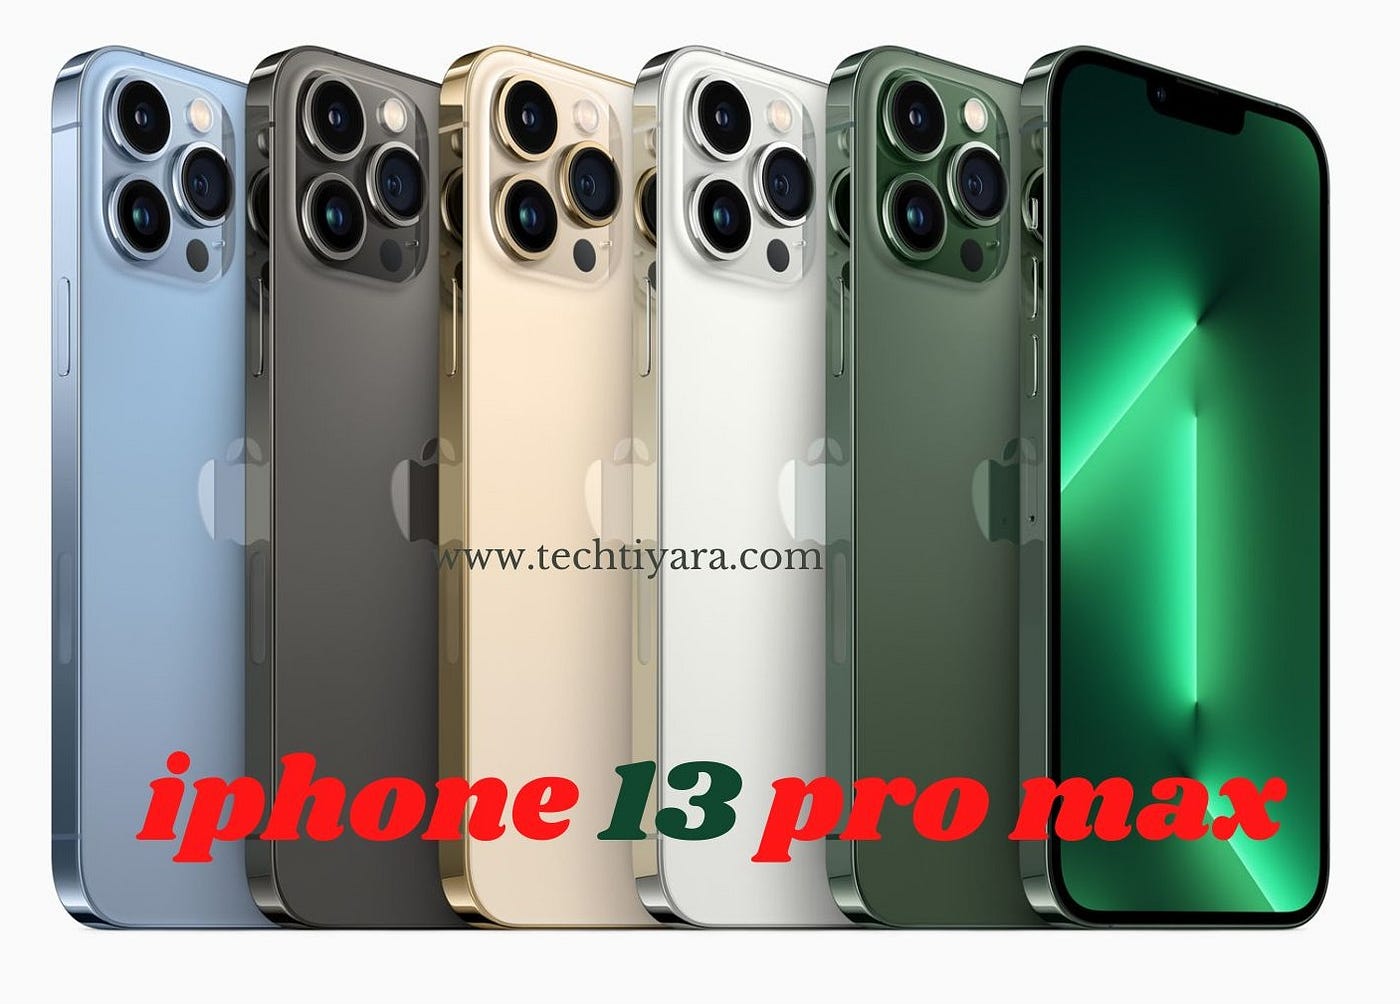 Apple iphone 13 pro max full specifications and price - Pankajpawar - Medium